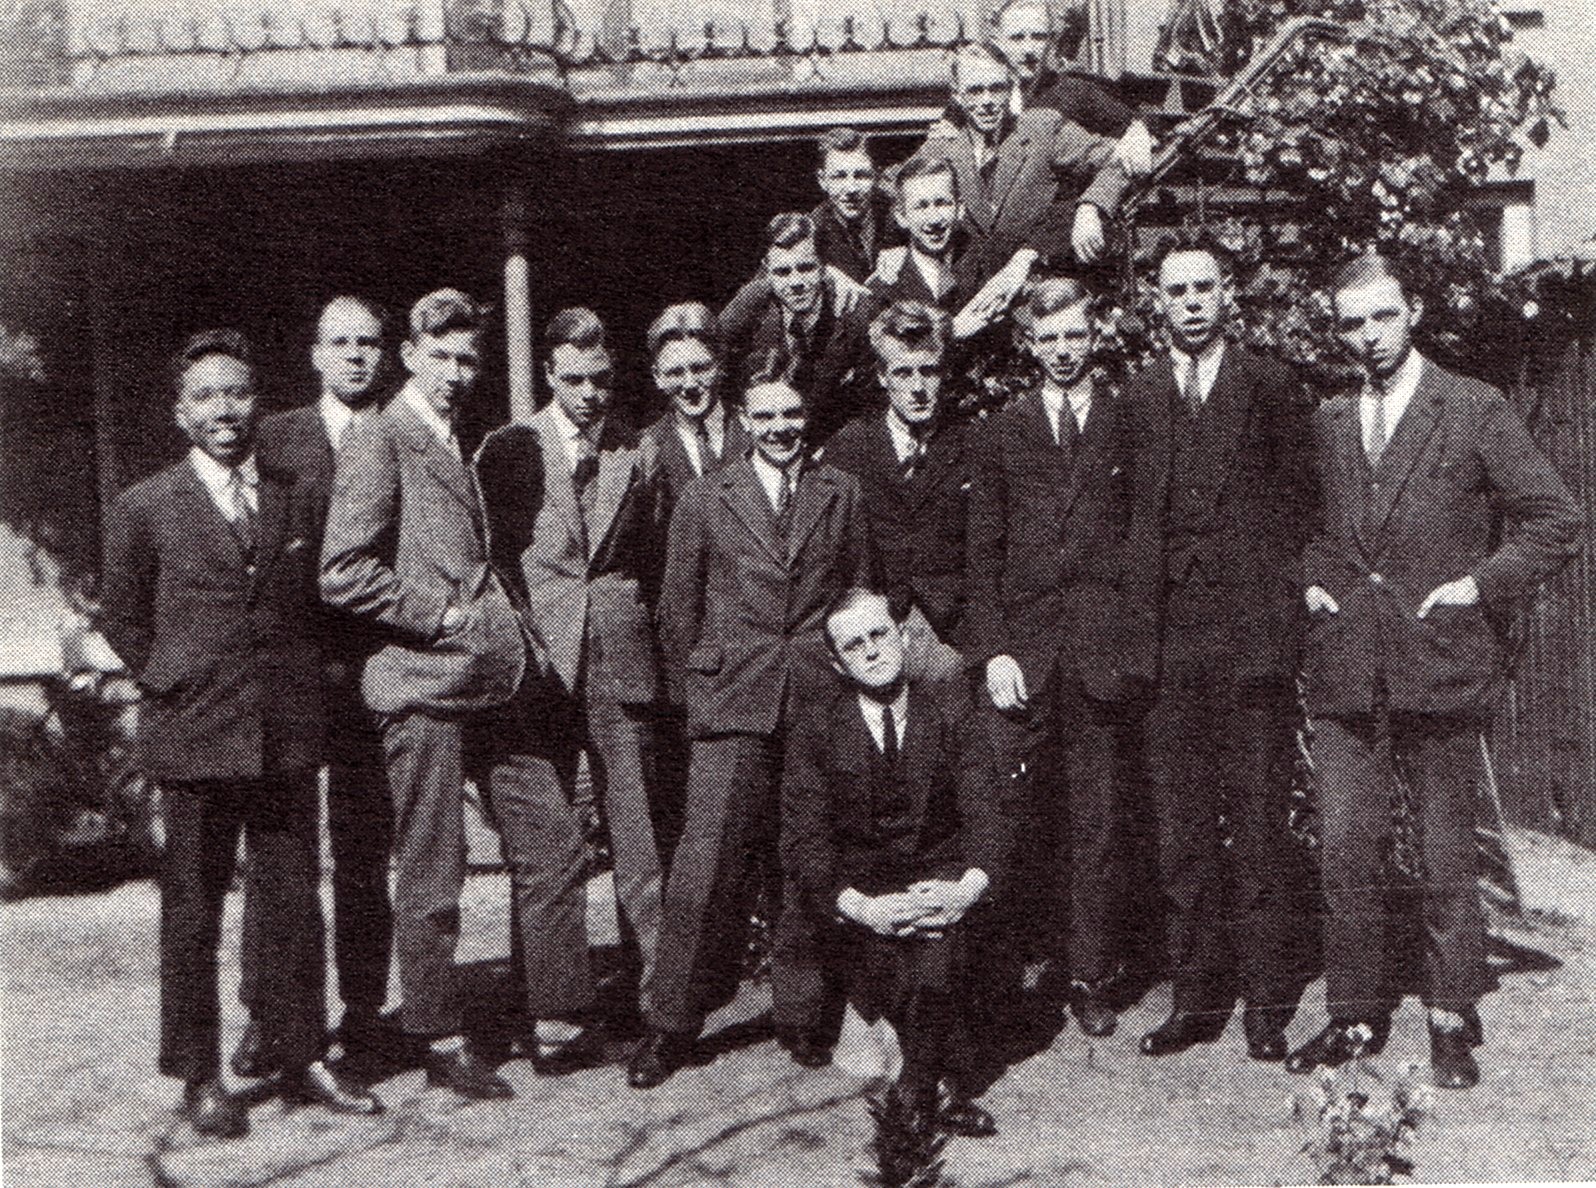 Klassenfoto periode 1920-1930